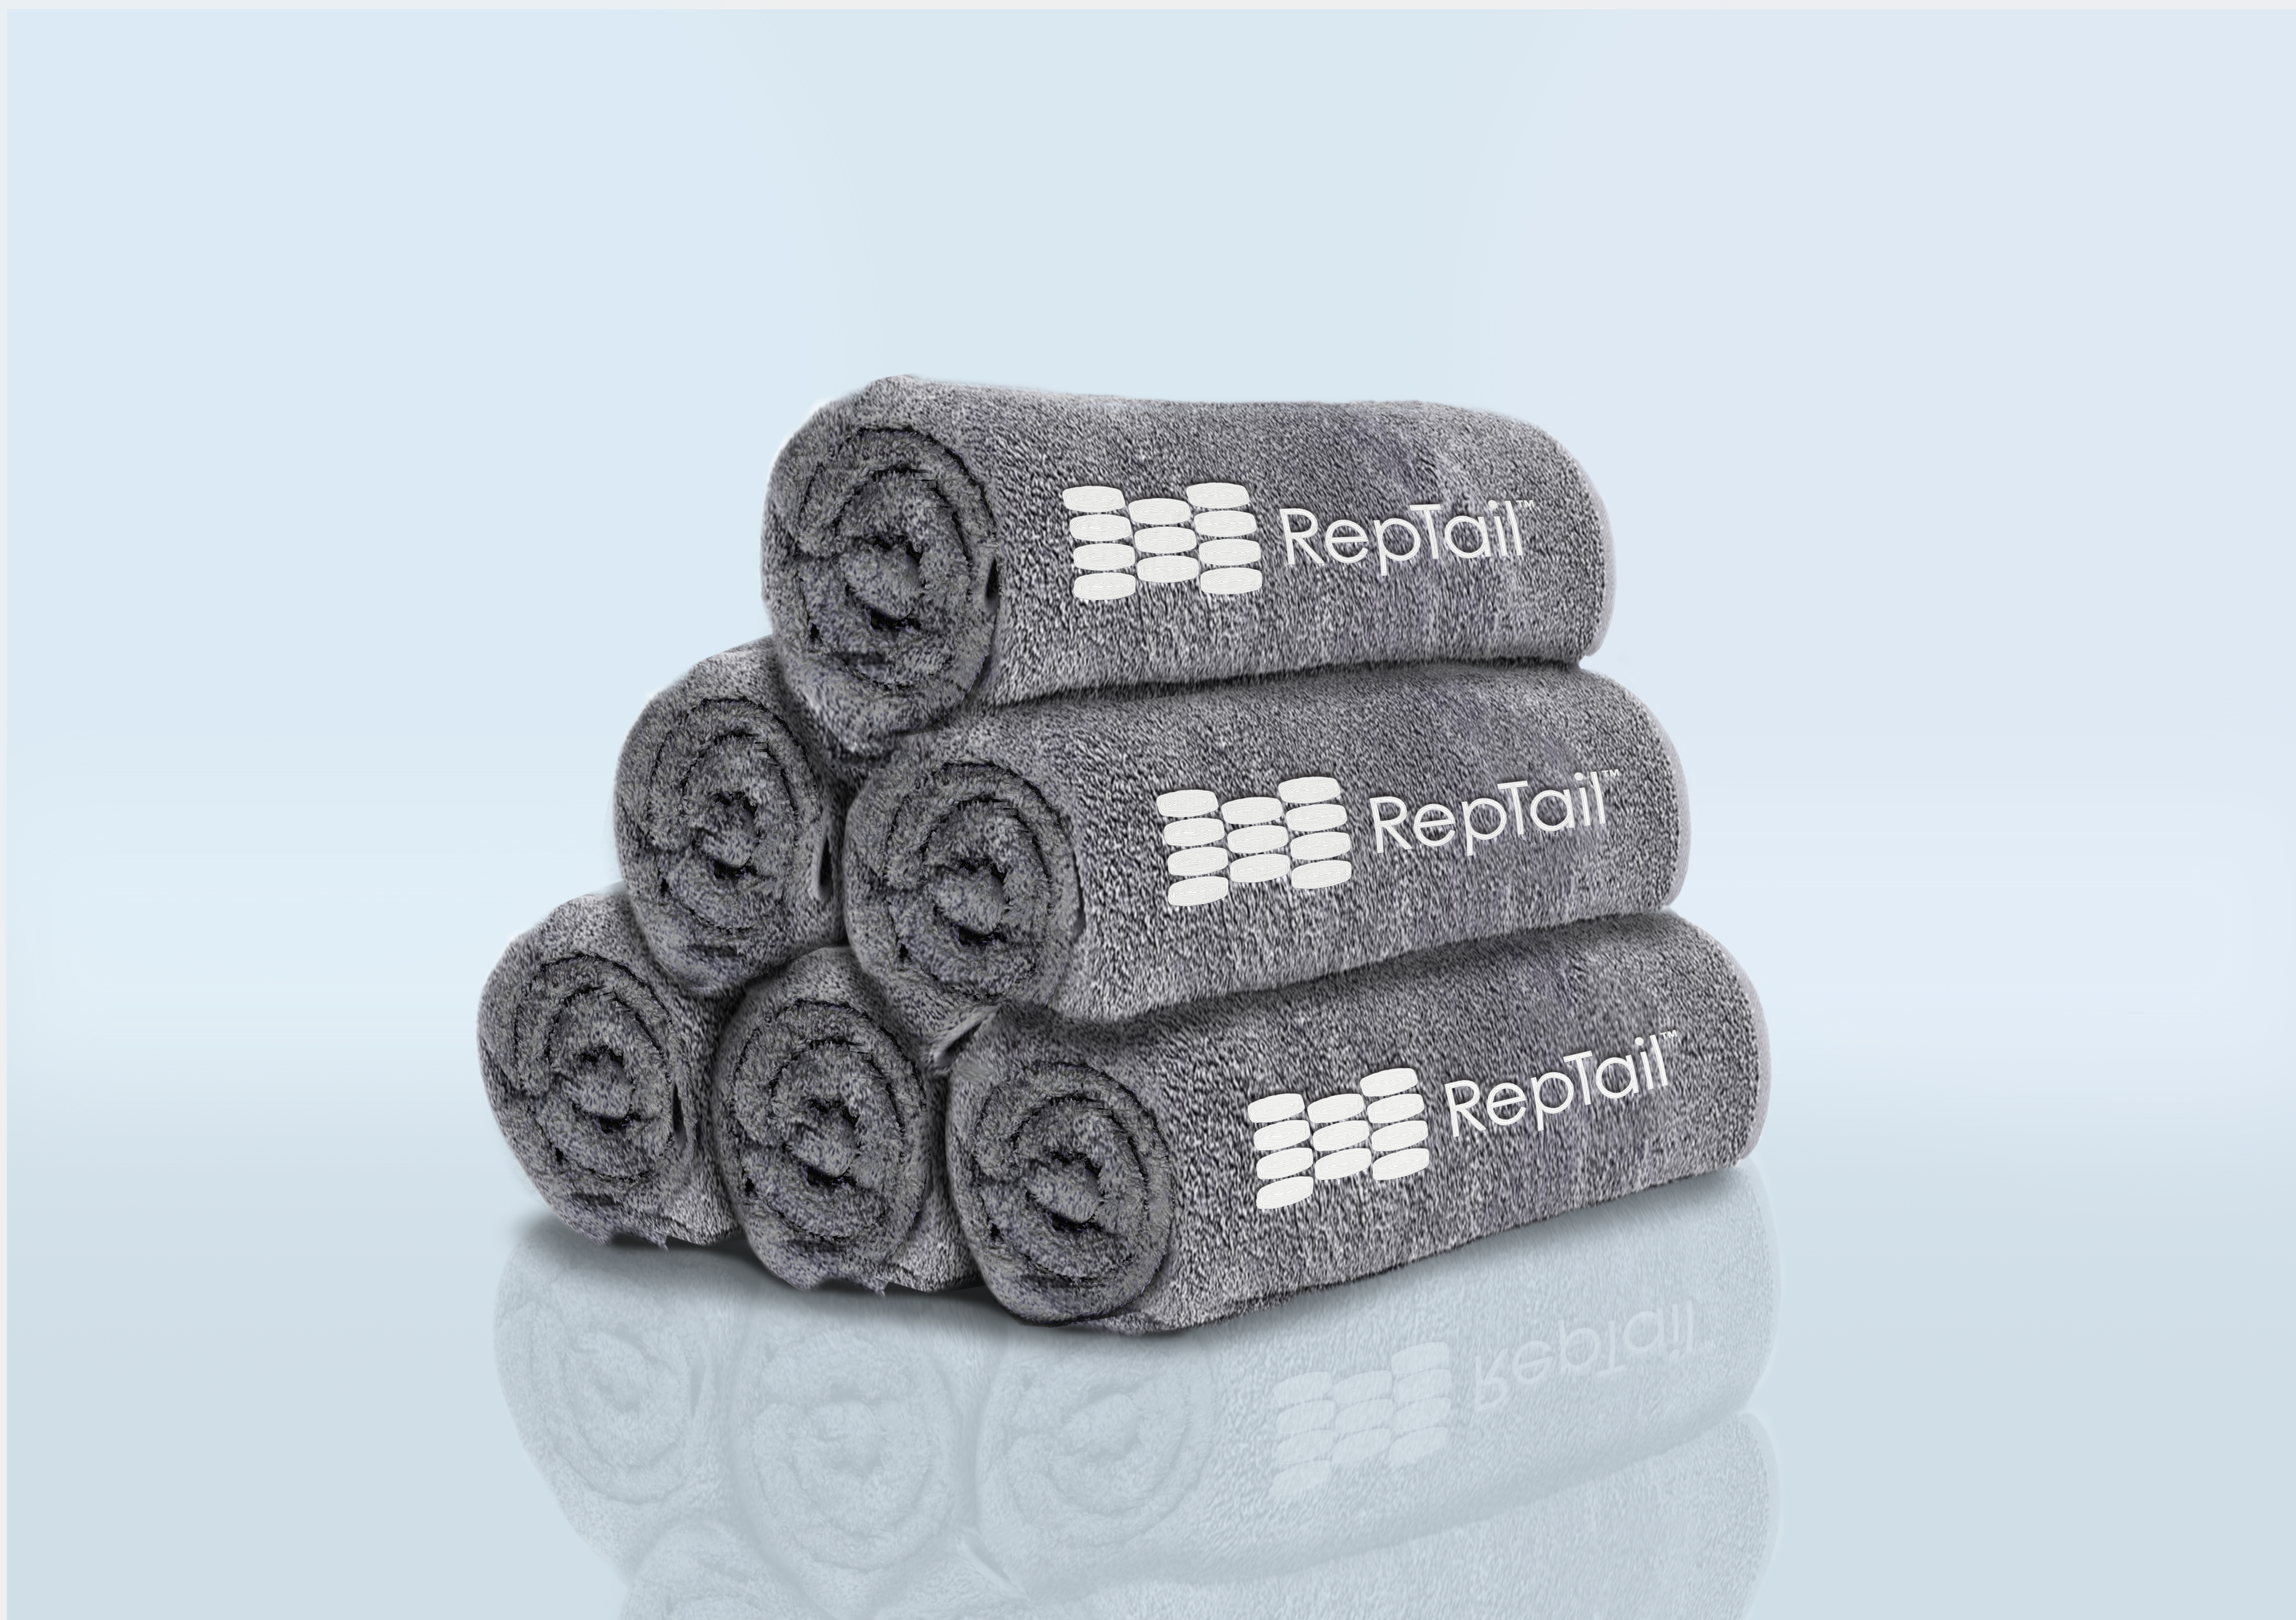 RepTail Training Towel